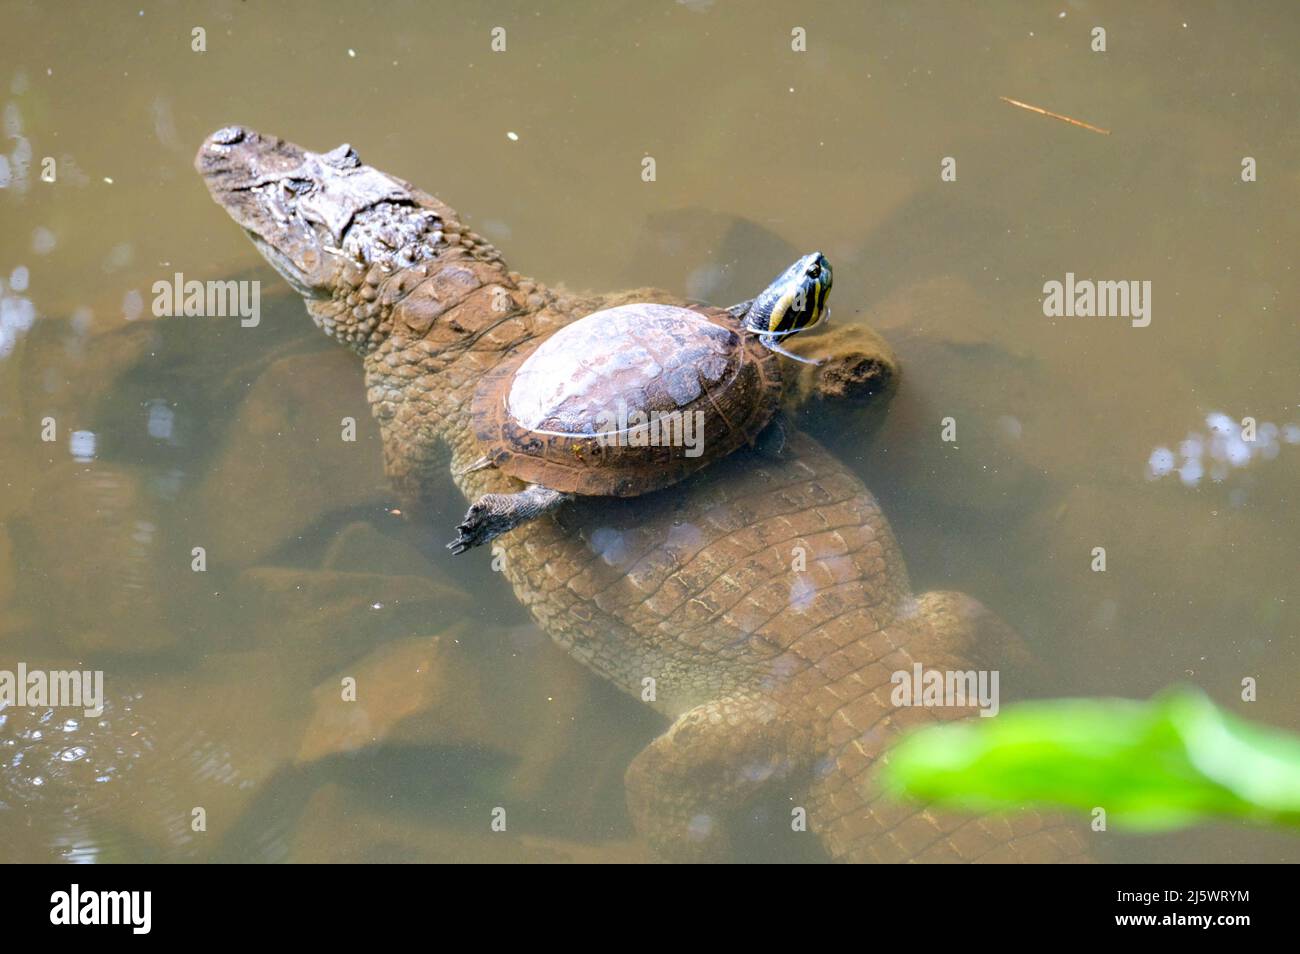 Turtle with crocodile. High quality photo Stock Photo